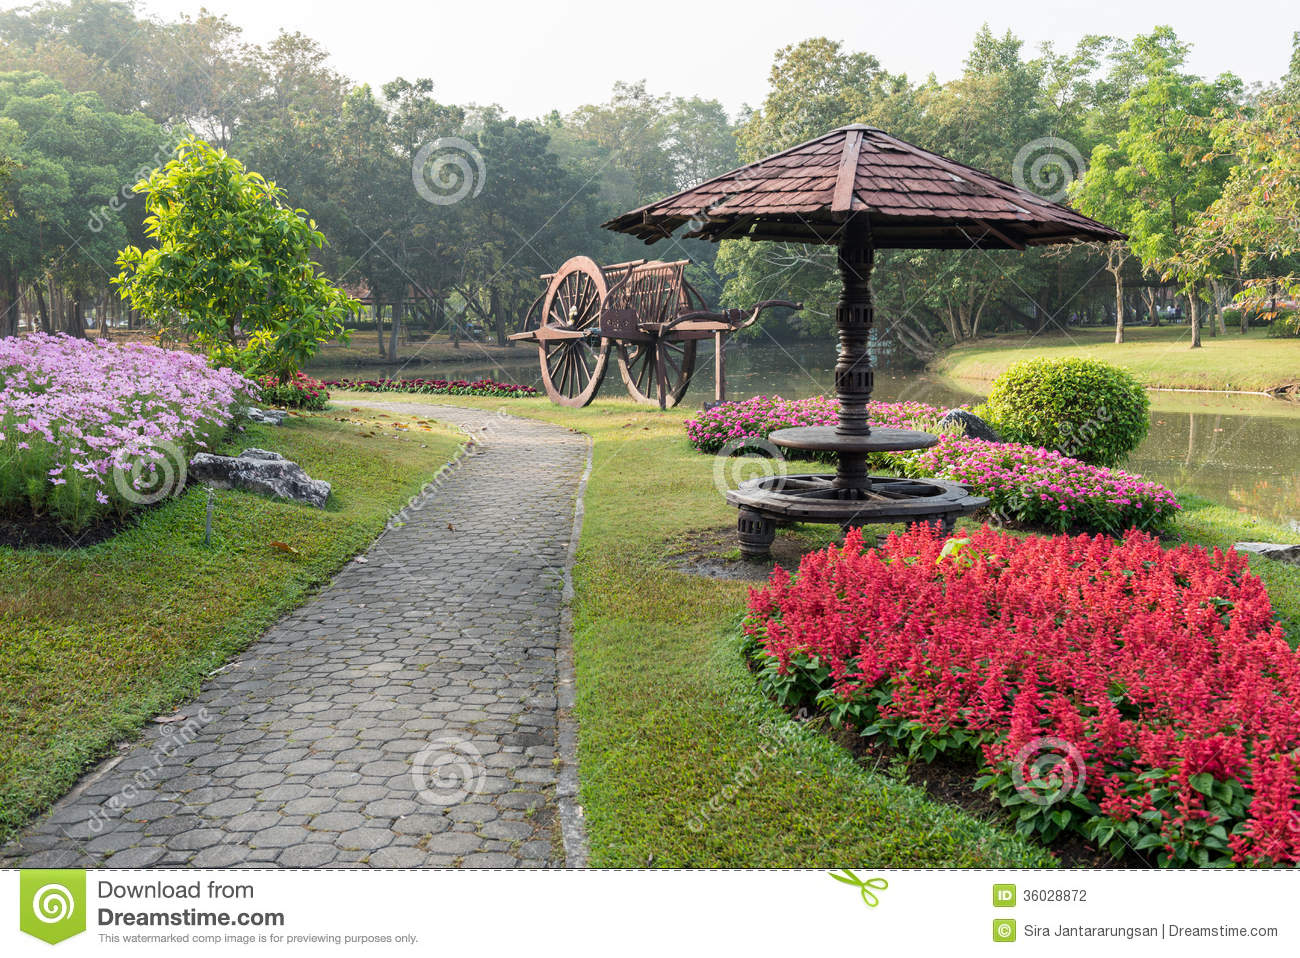 Flower garden background images - ClipartFest